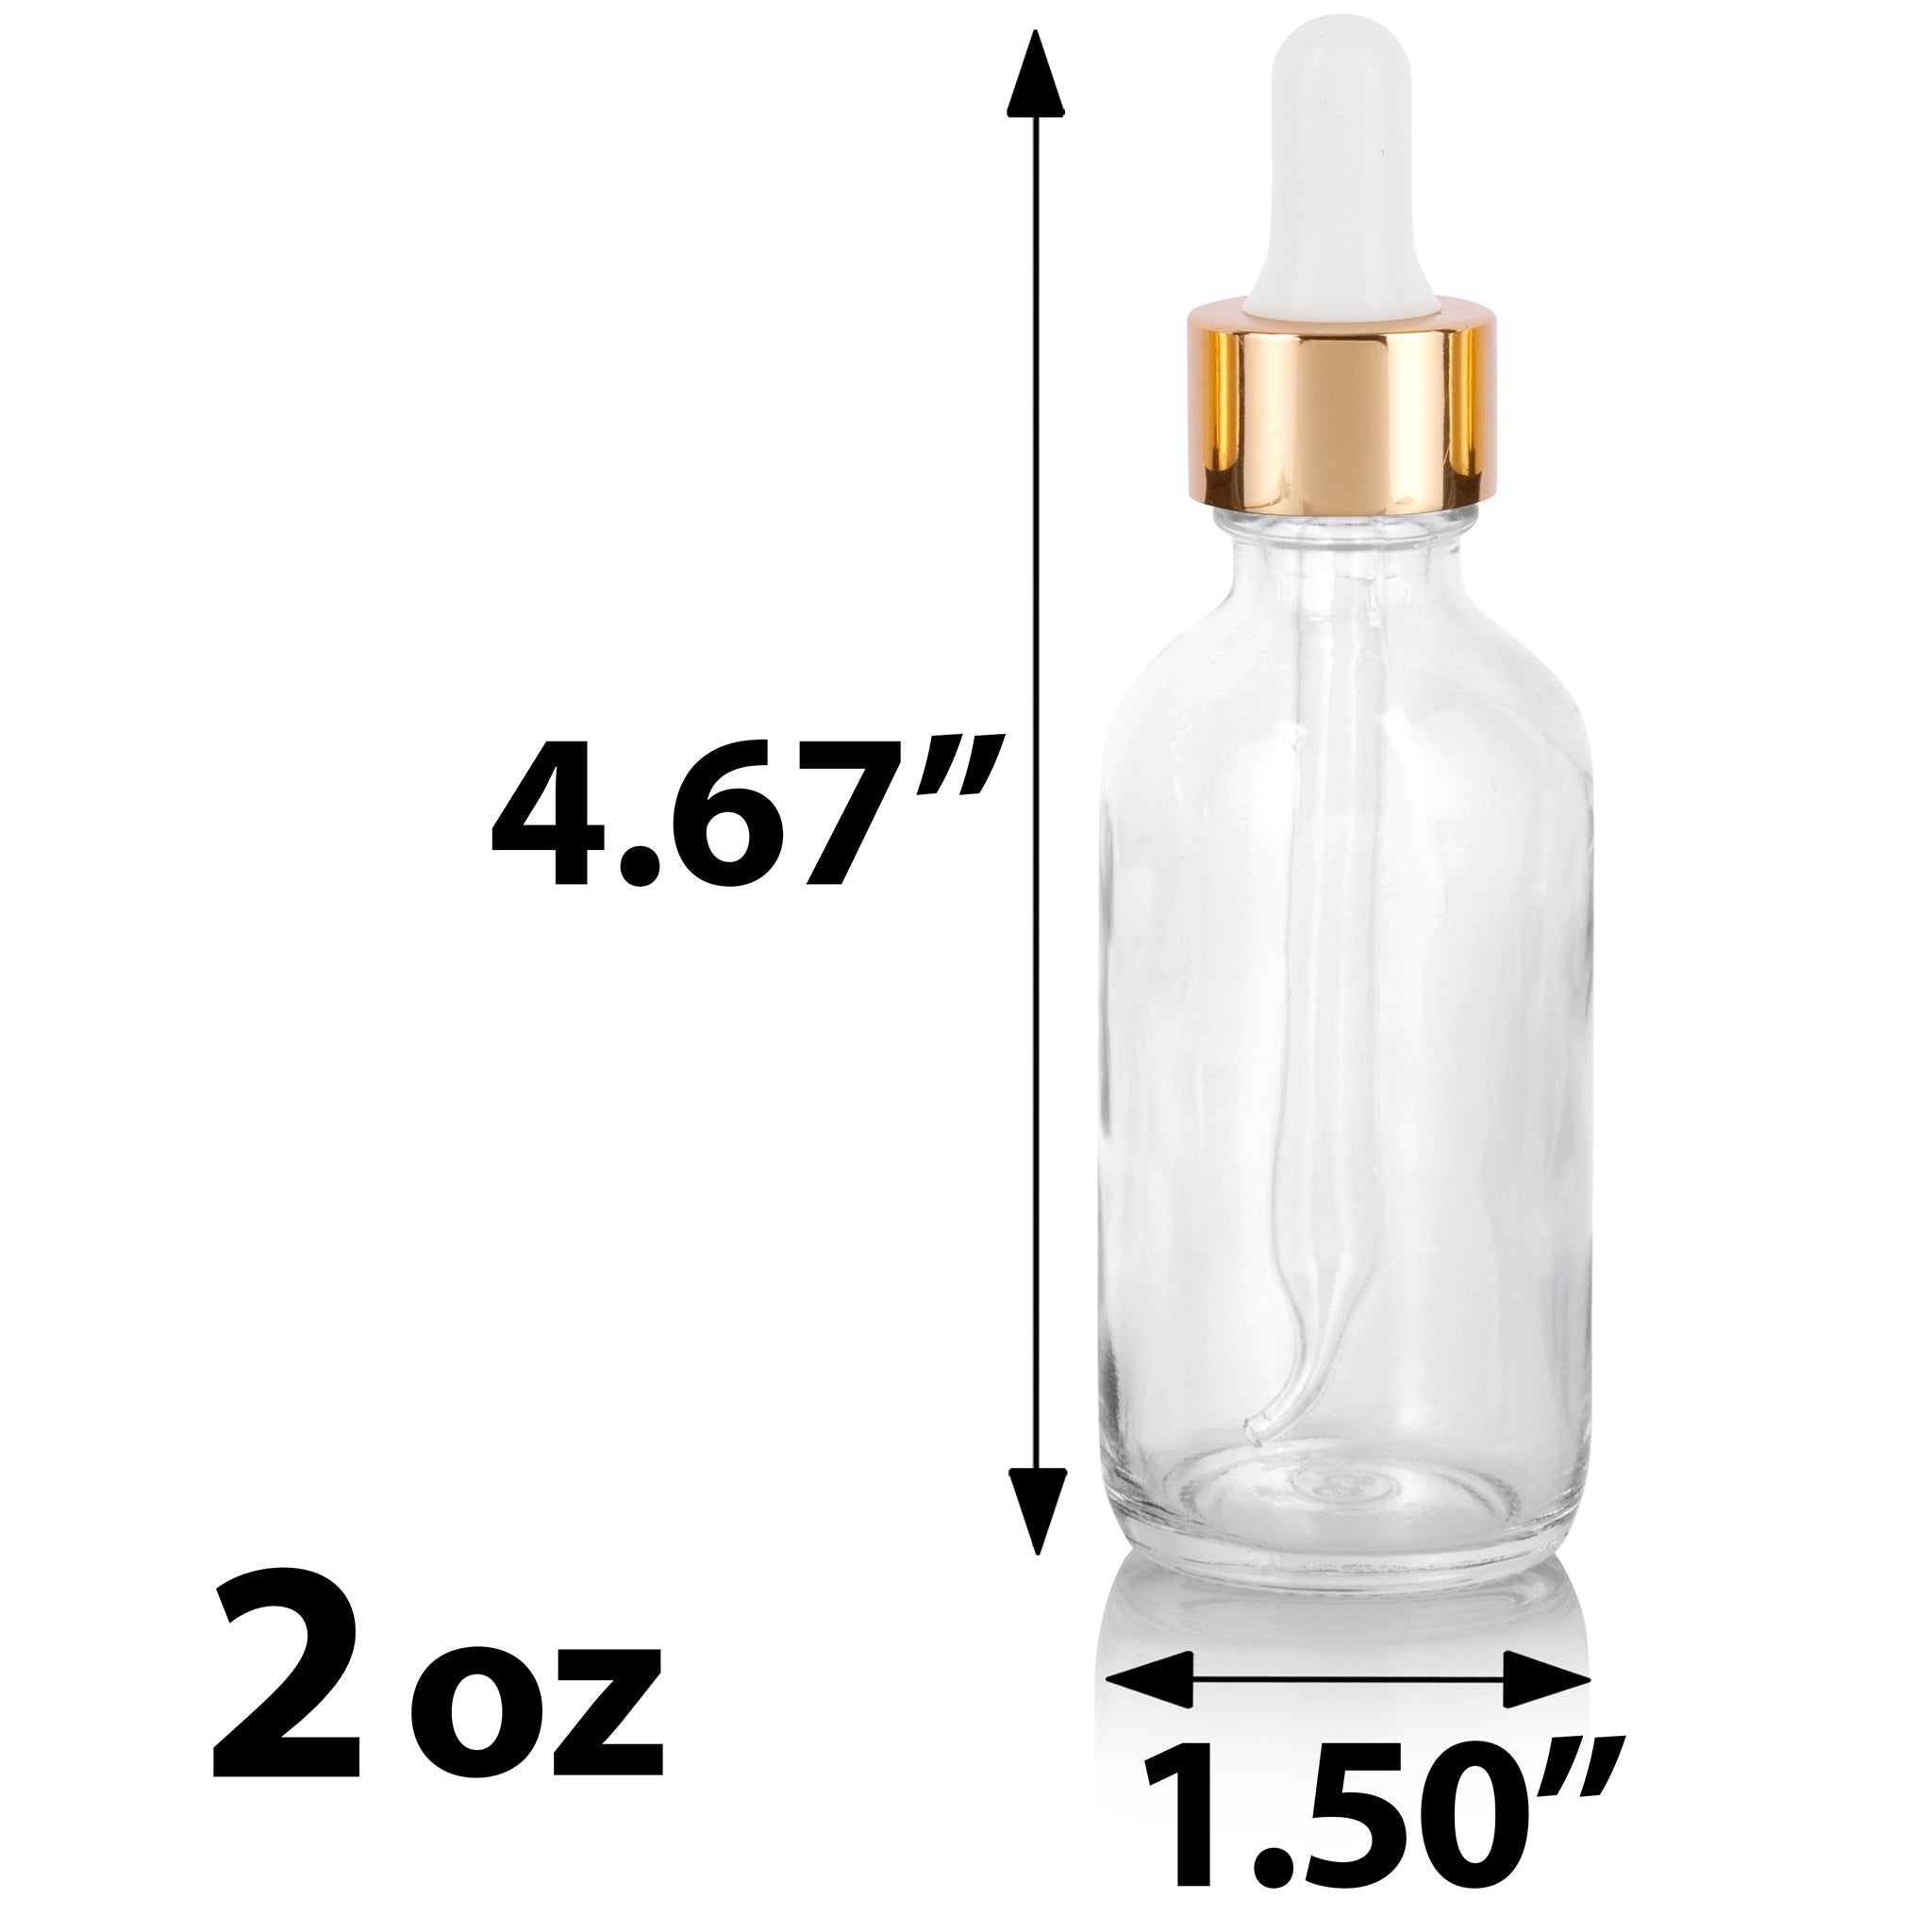 12 oz Glass Bottle w/Cap - 24 pack